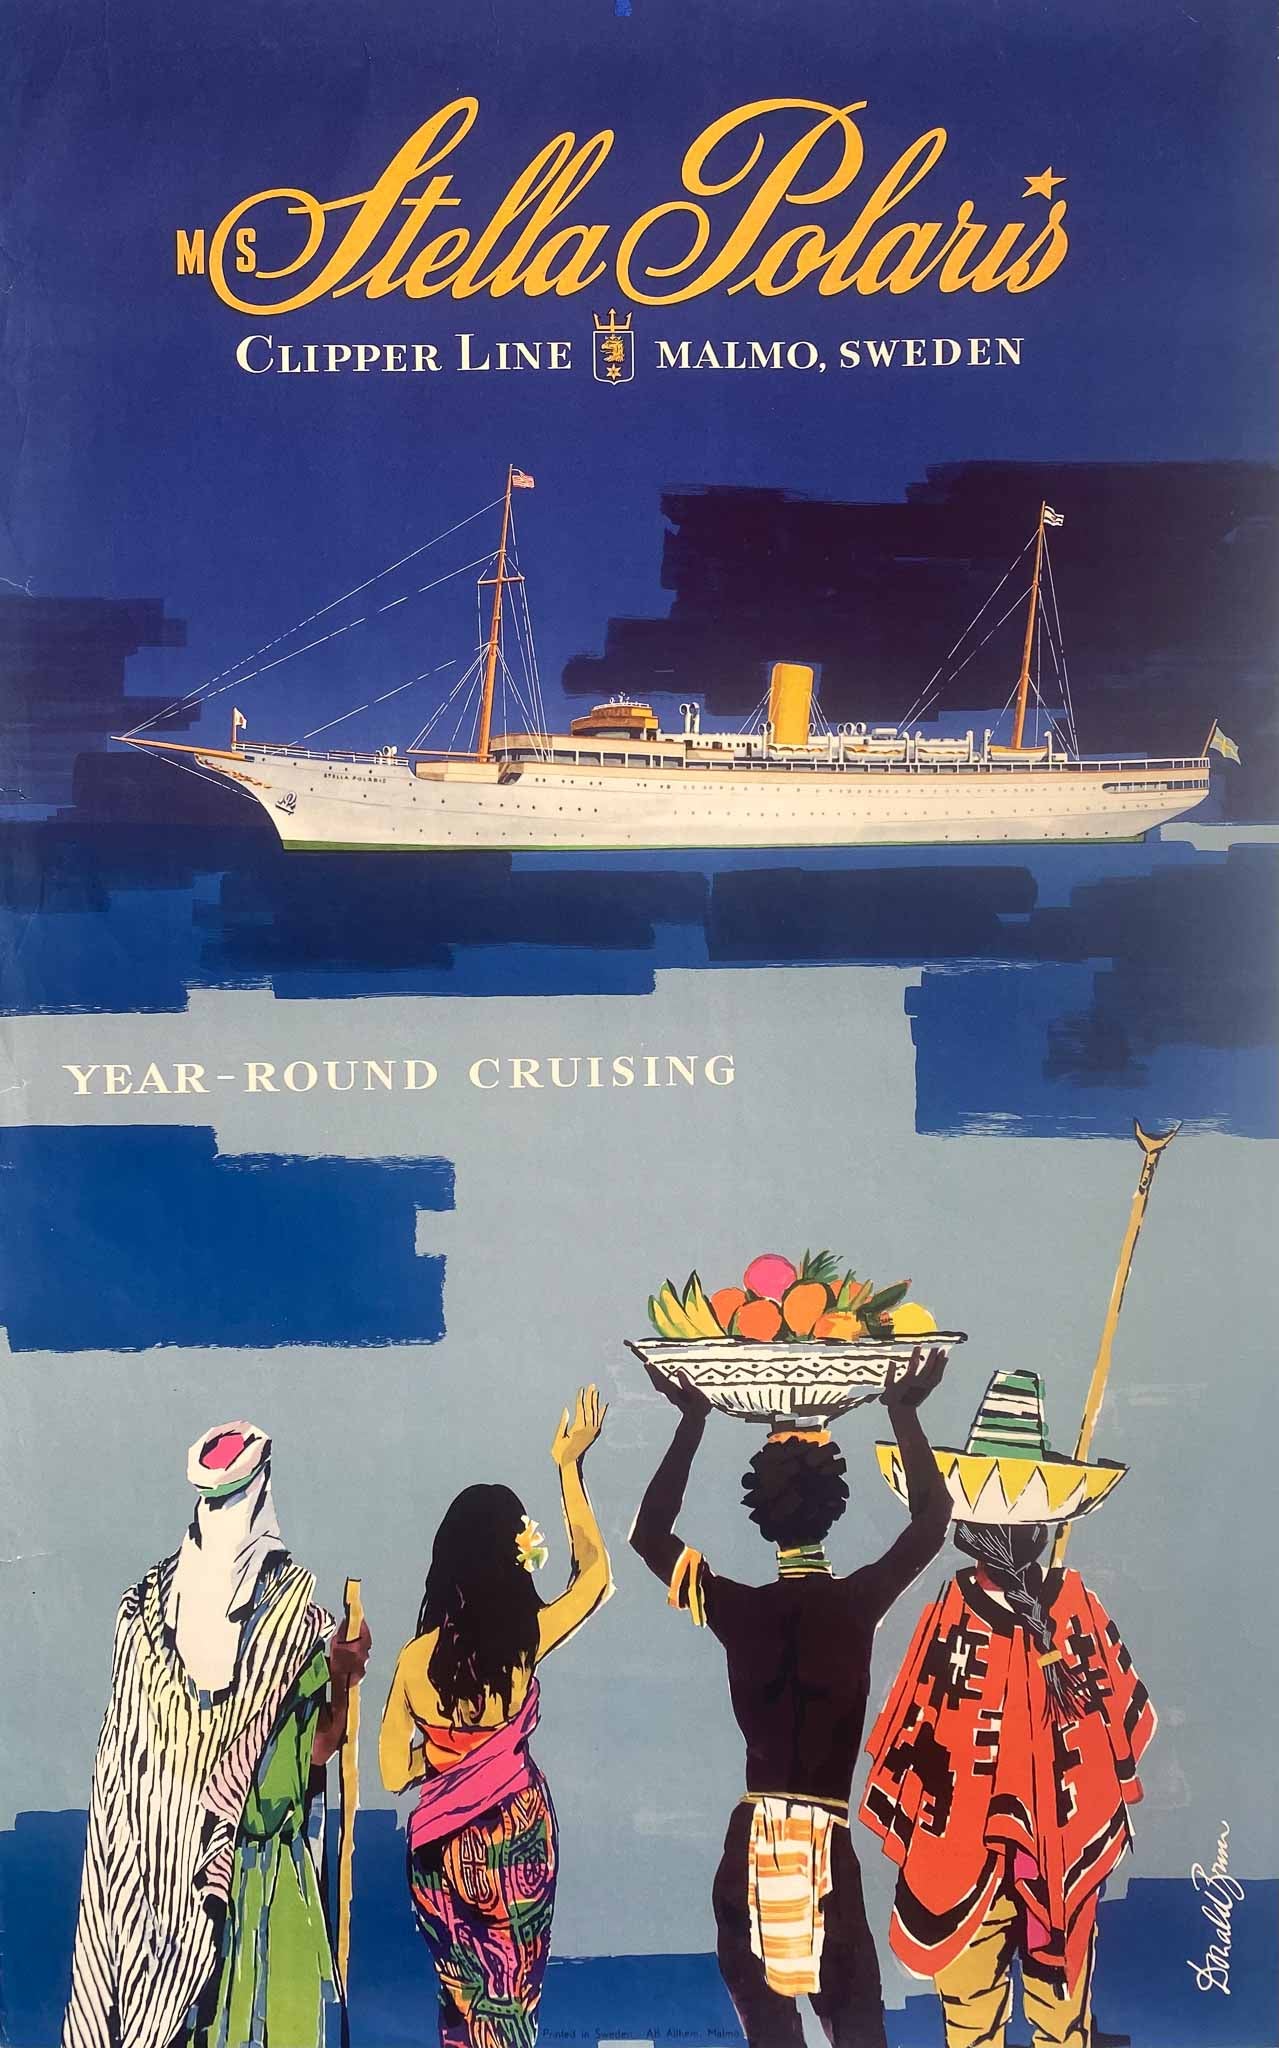 Affiche Ms Stella Polaris, Clipper Line , Malmo, Sweden Year-Round Cruising par Brun Donald, 1950